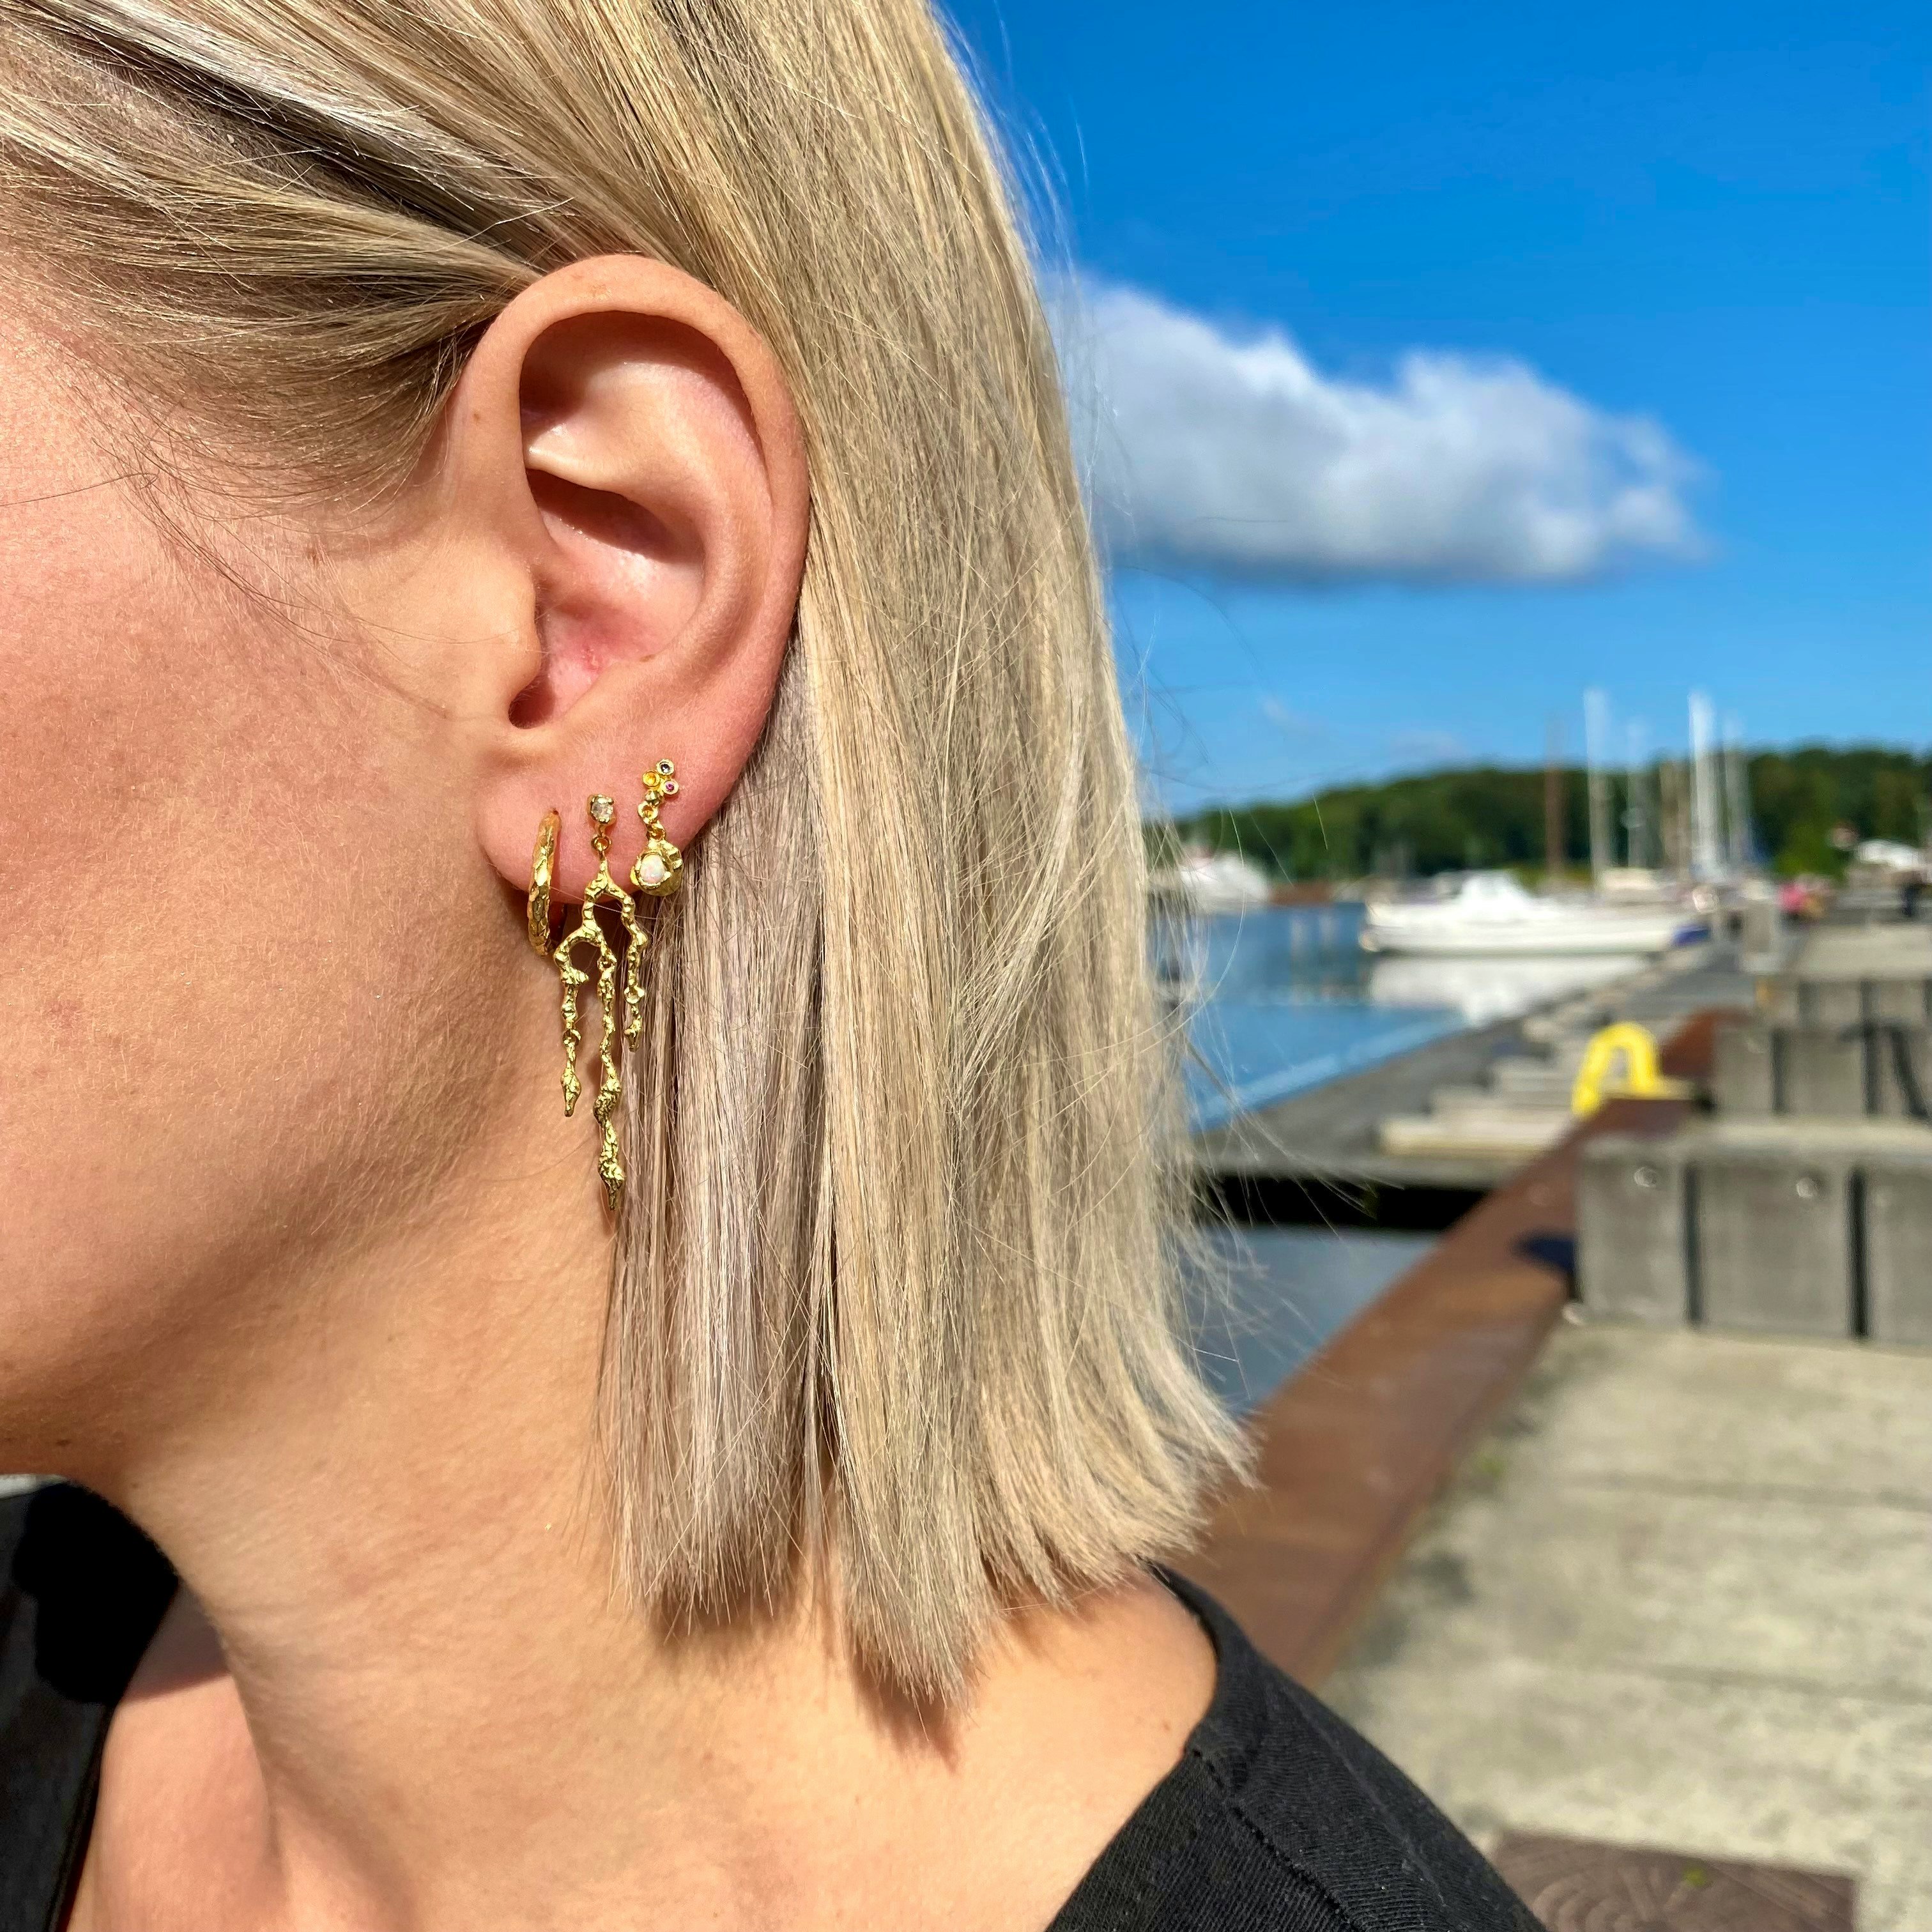 Ina Big earrings von Maanesten in Vergoldet-Silber Sterling 925